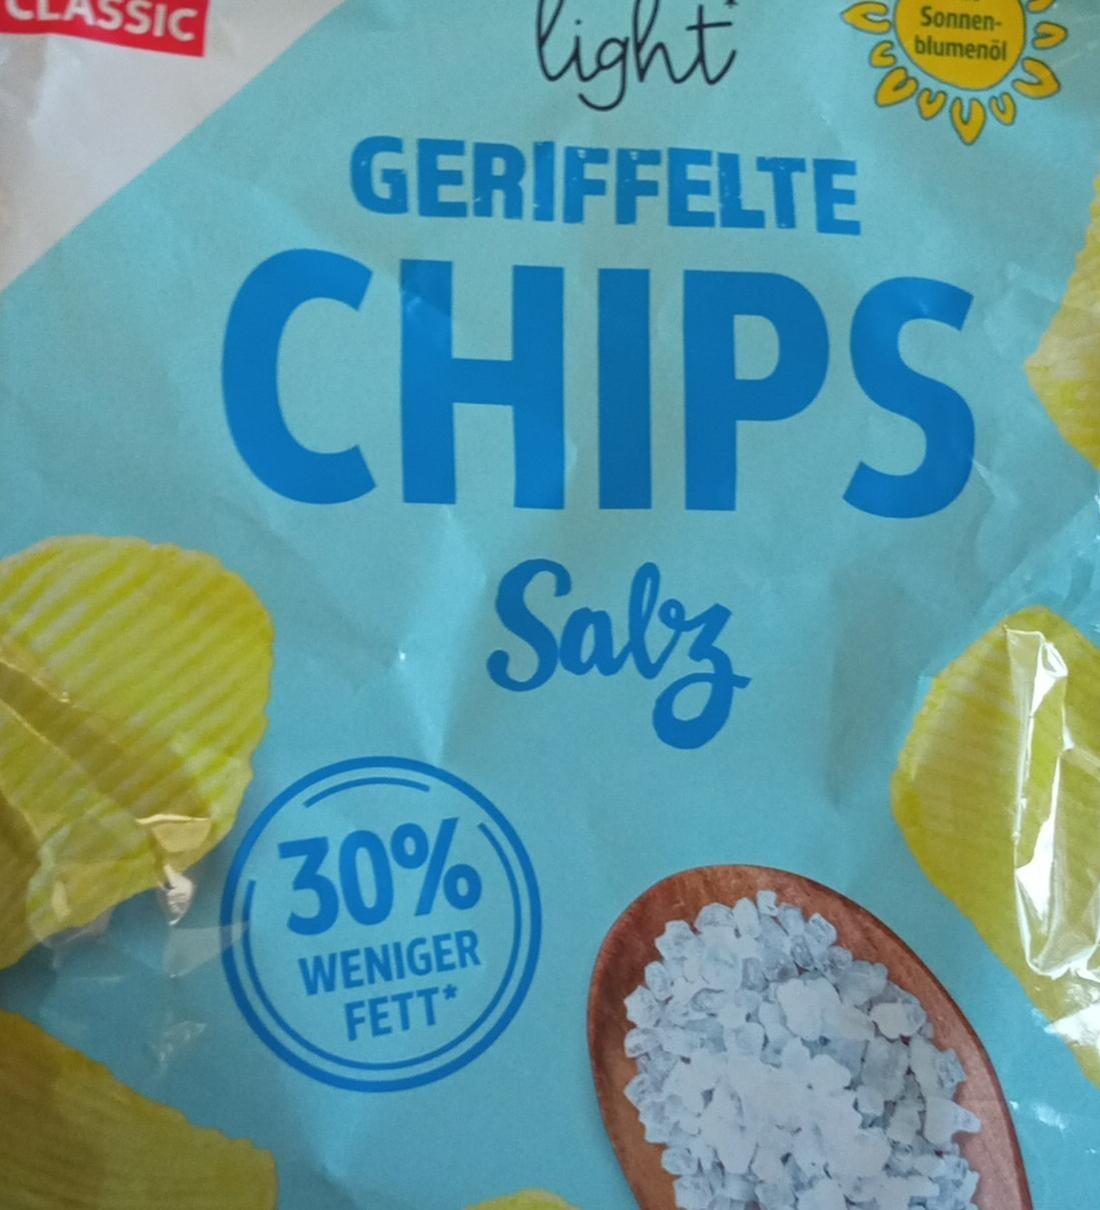 Fotografie - Geriffelte salz chips light 30% weniger fett K-Classic